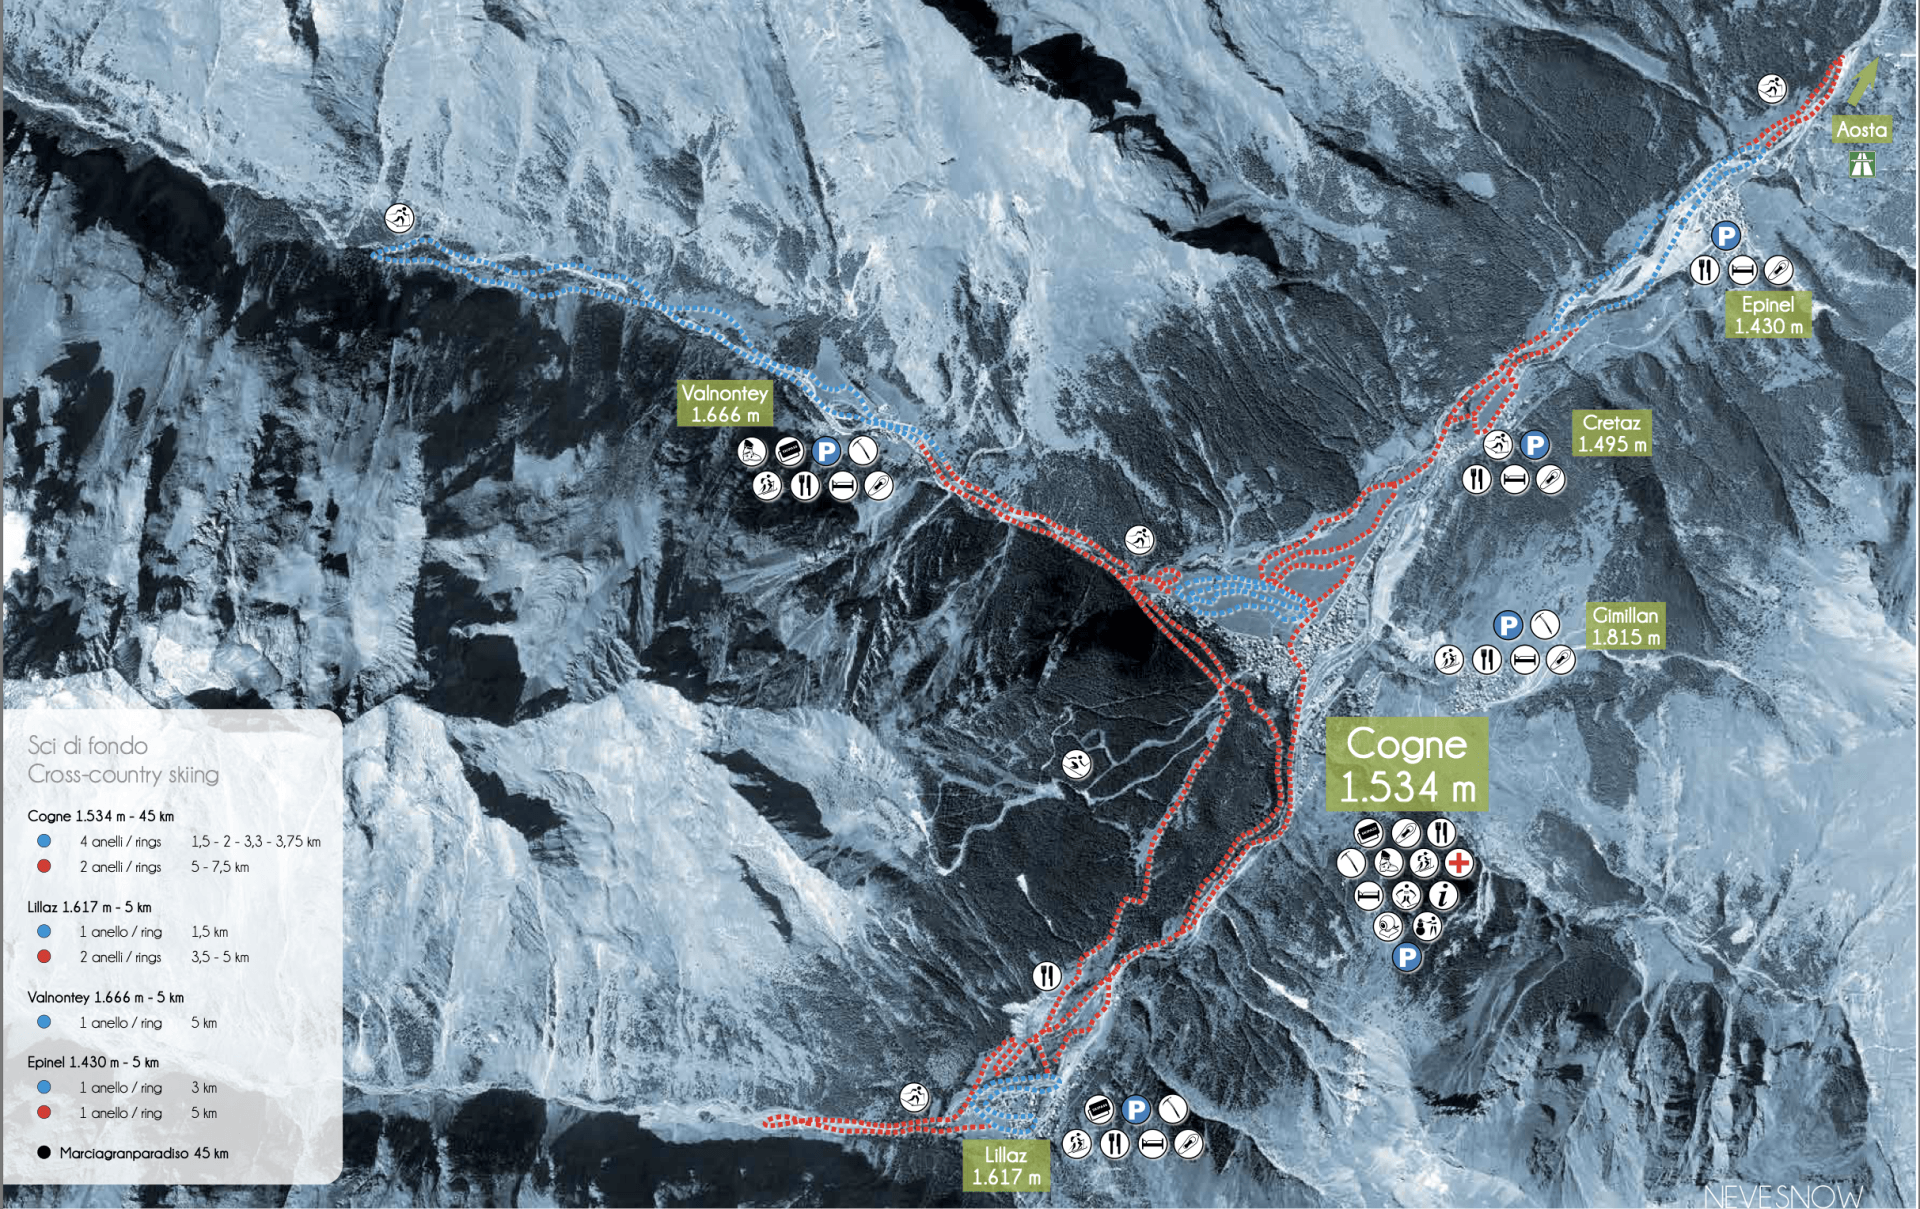 Cogne cross country ski map